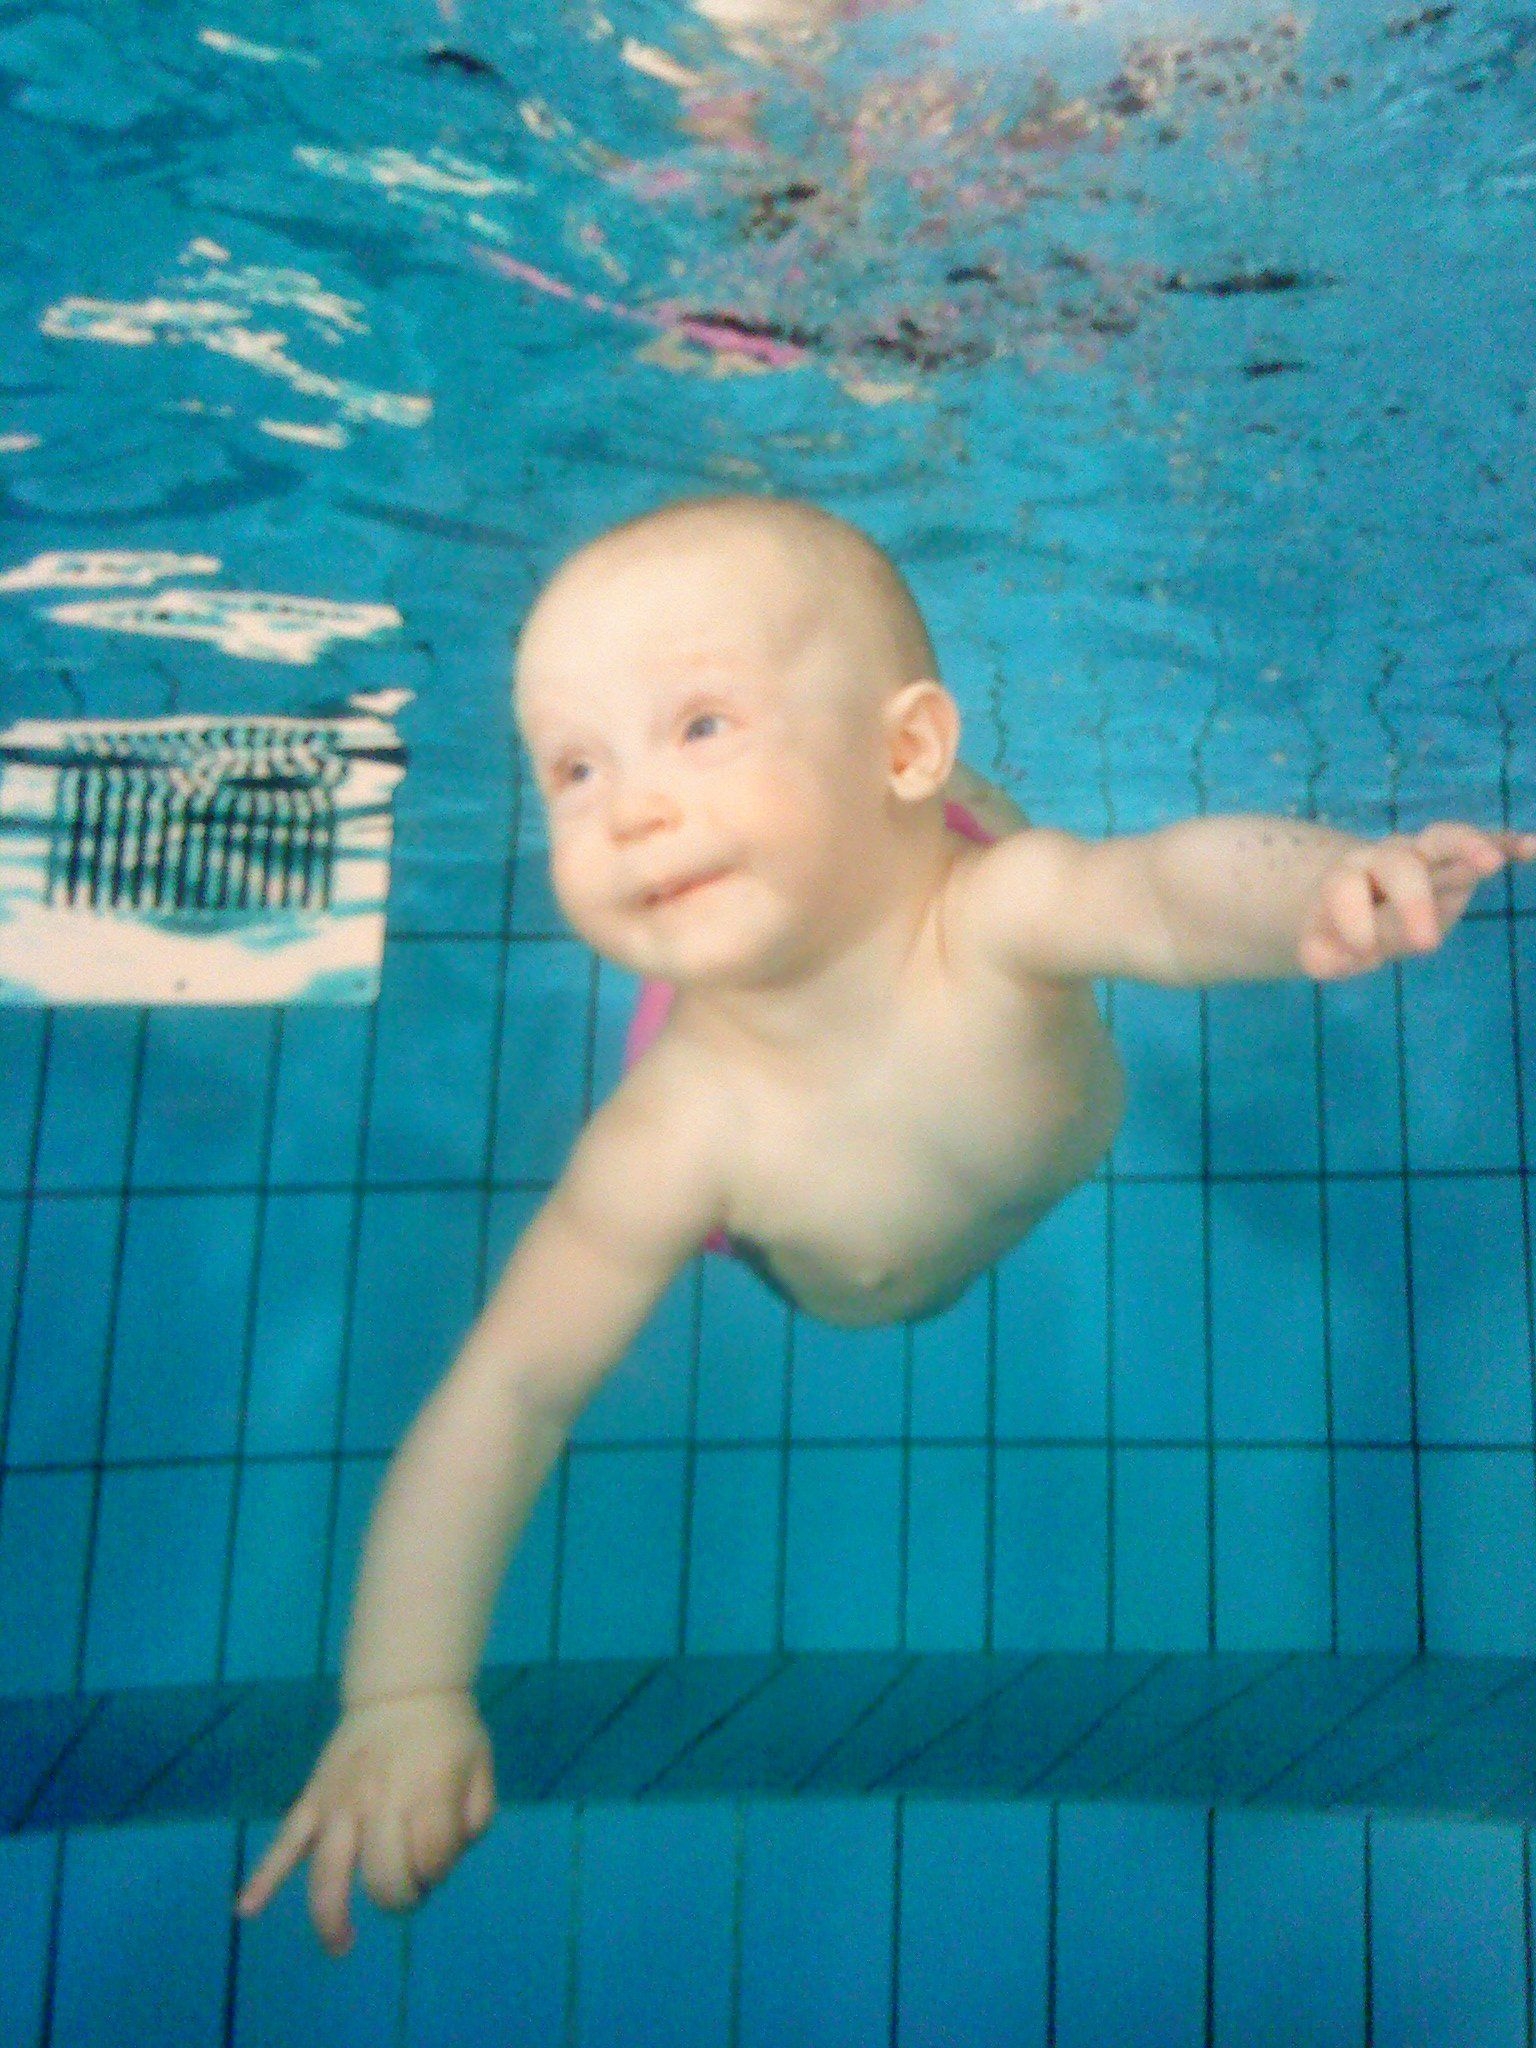 Infant Swimming - Wikipedia